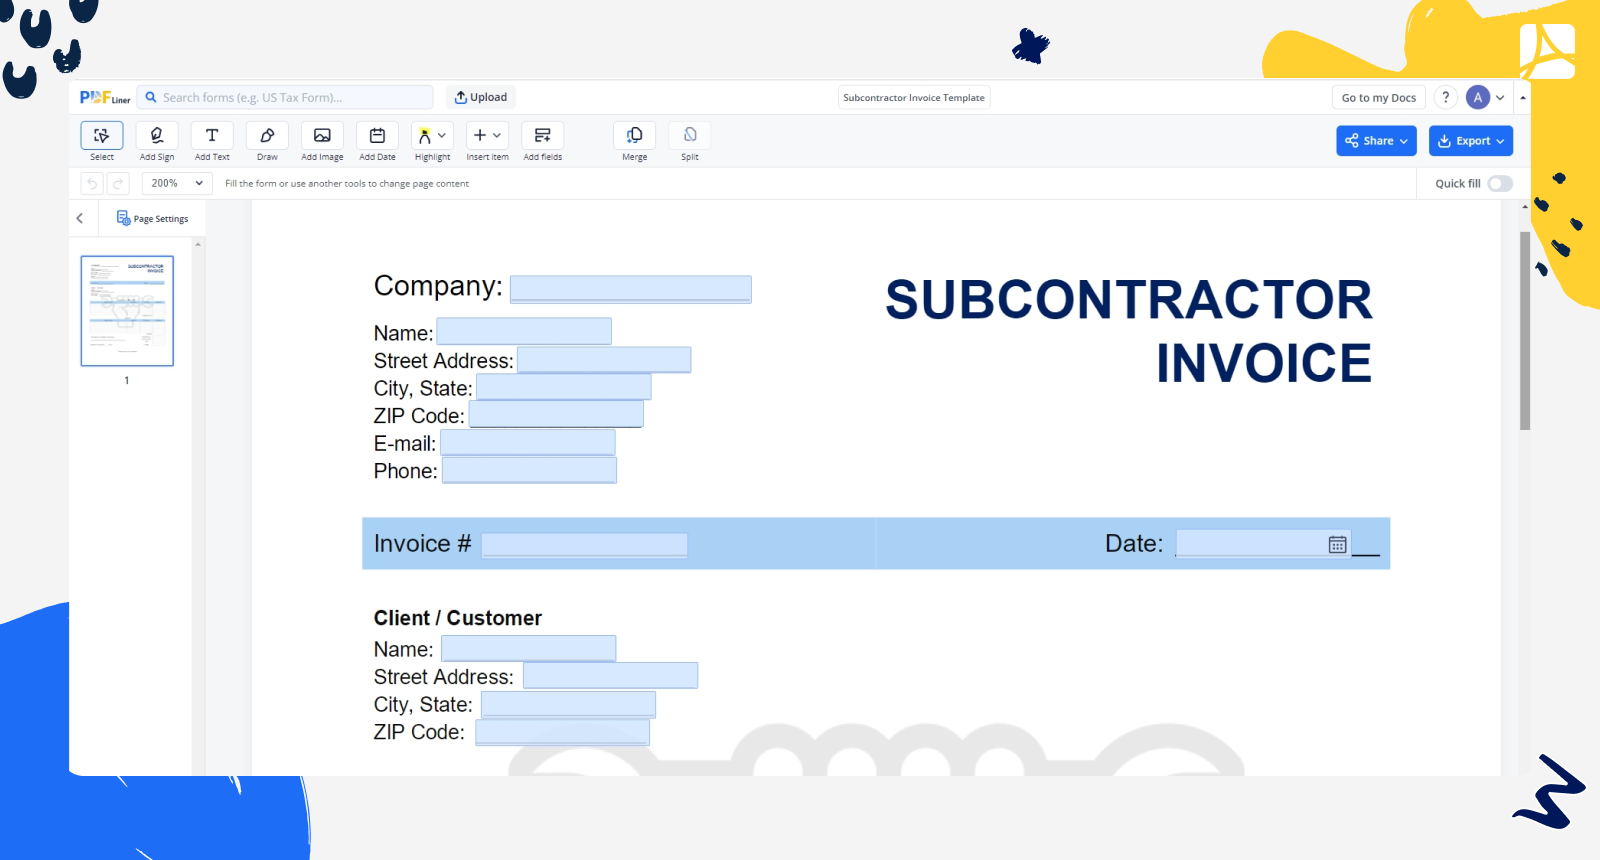 Subcontractor Invoice Template screenshot